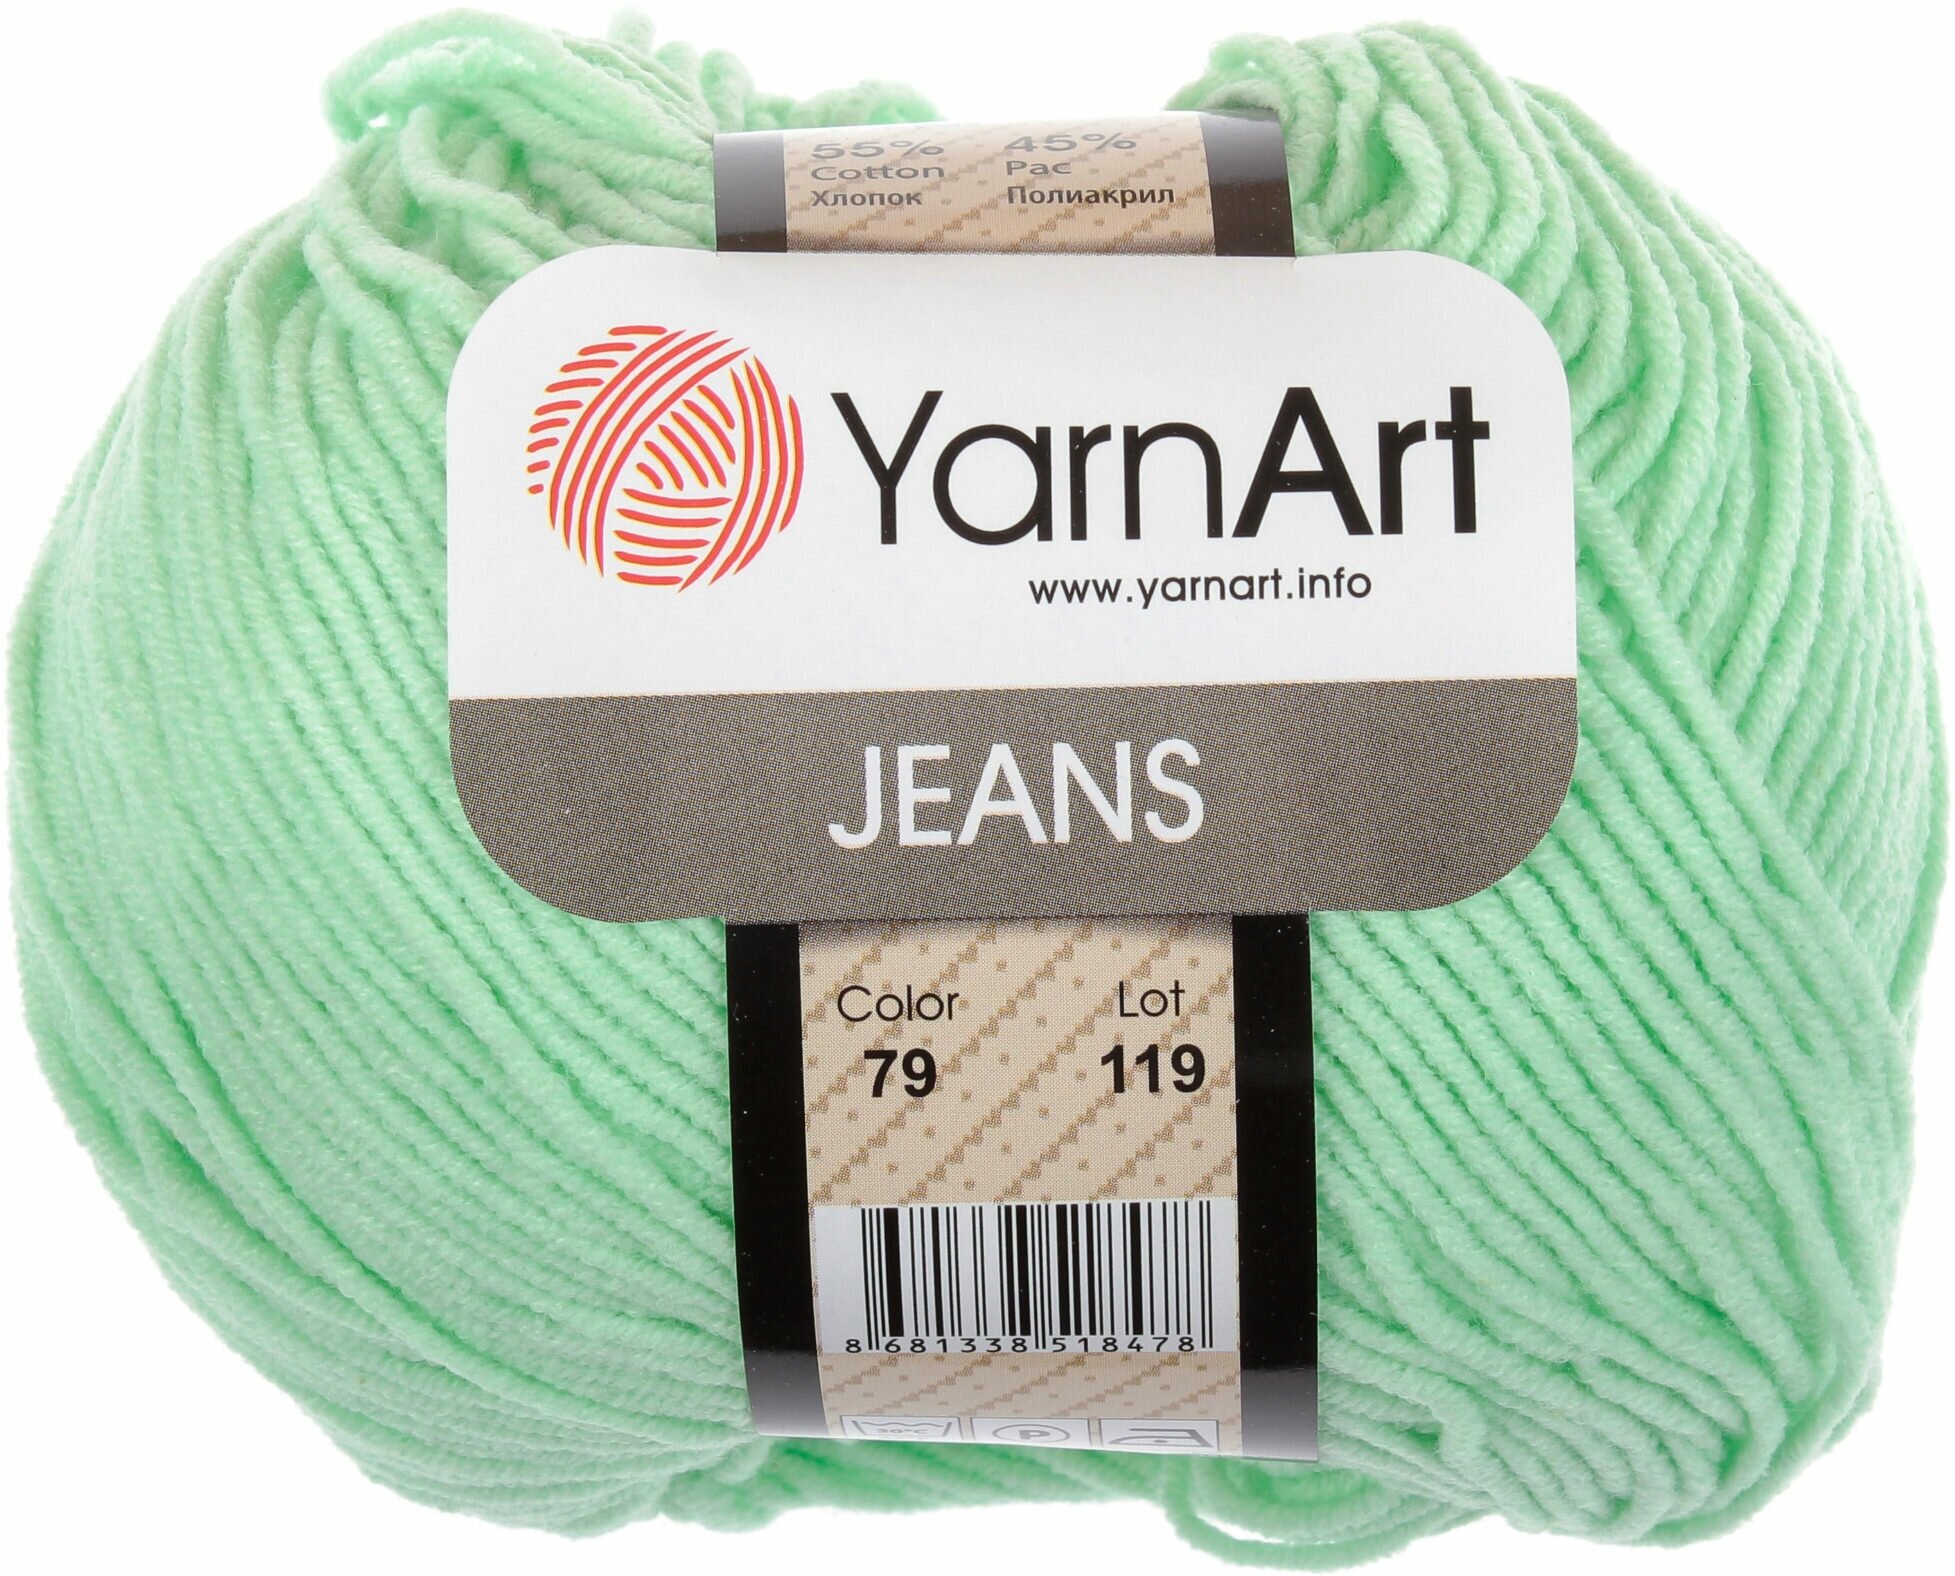 Пряжа YarnArt Jeans мята (79), 55%хлопок/45%акрил, 160м, 50г, 2шт